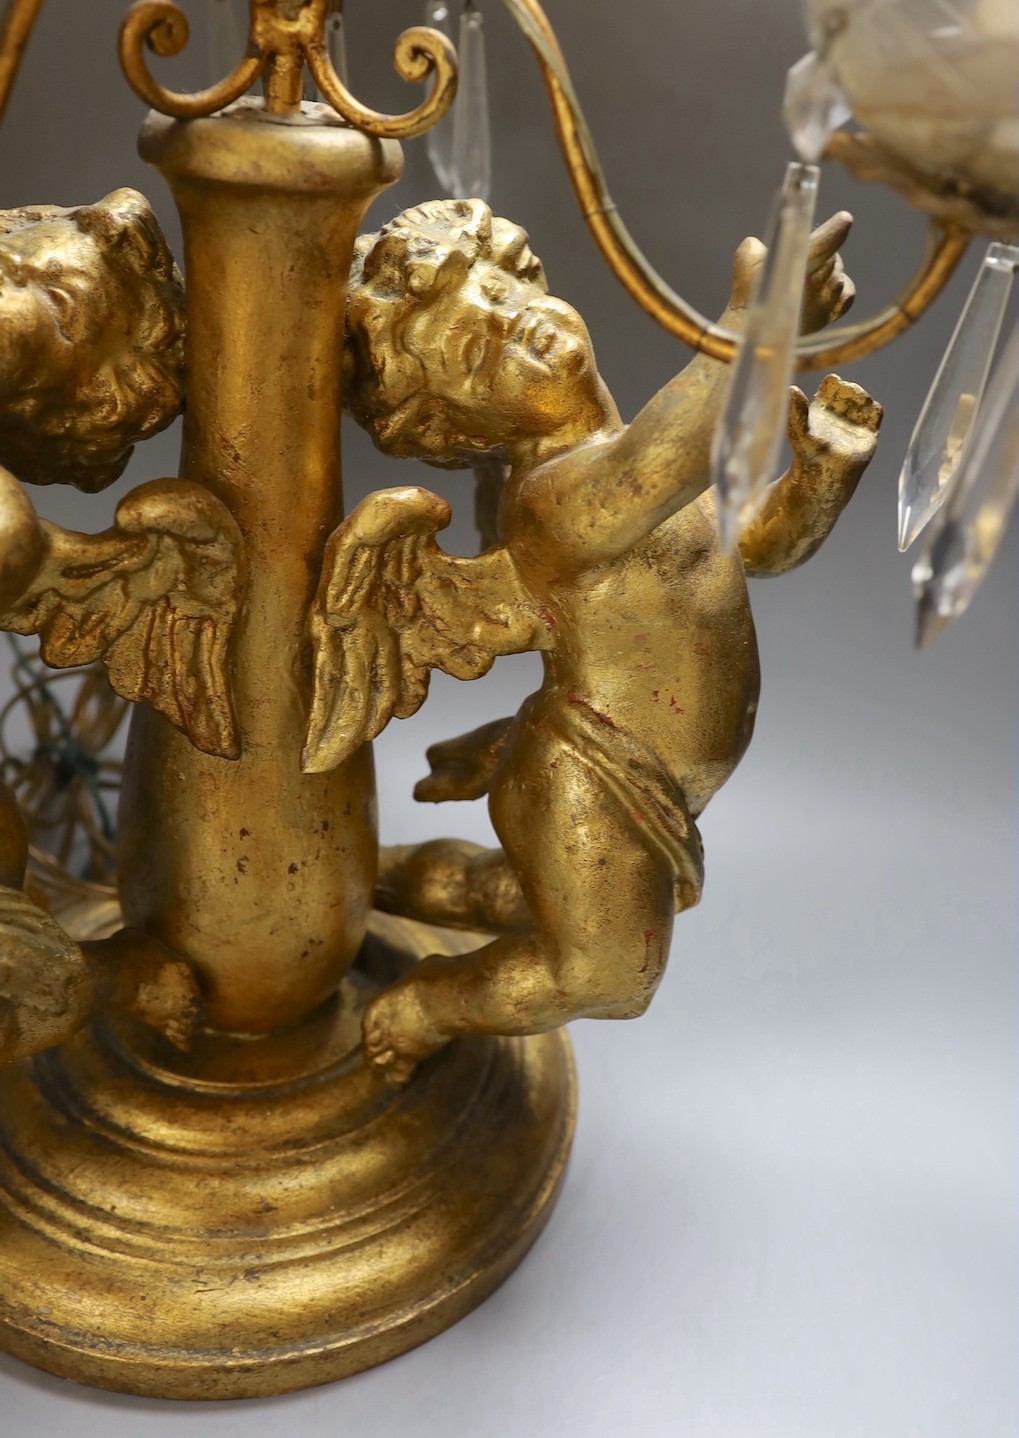 An Italian three branch gilt cherubs decorative lamp with cut glass lustre drops - 64cm high - Image 2 of 2